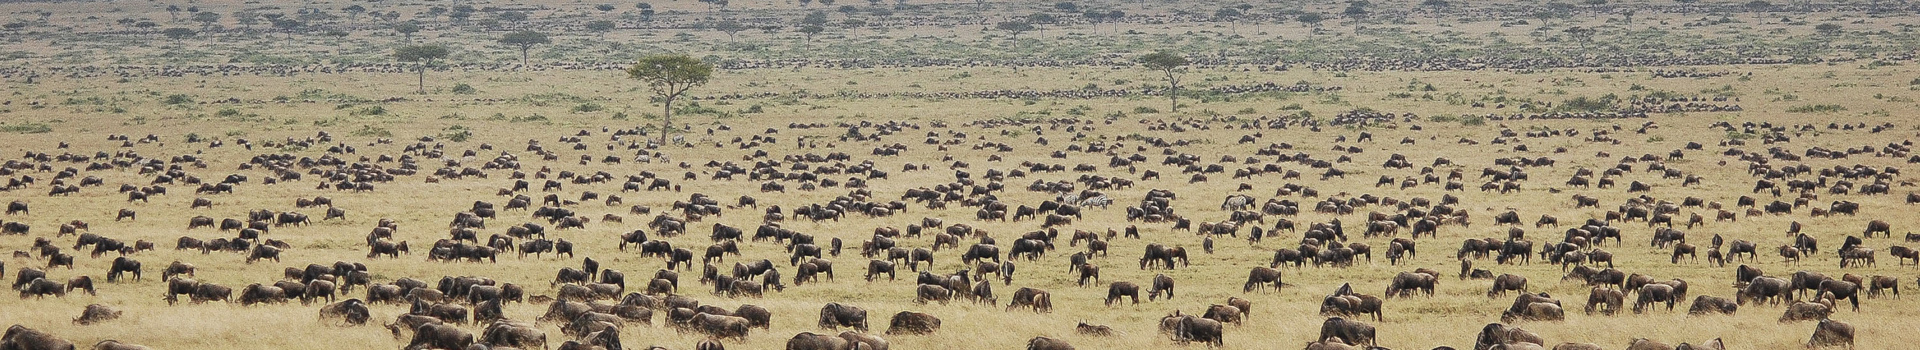 Tanzania Special migration Masai Mara Migration